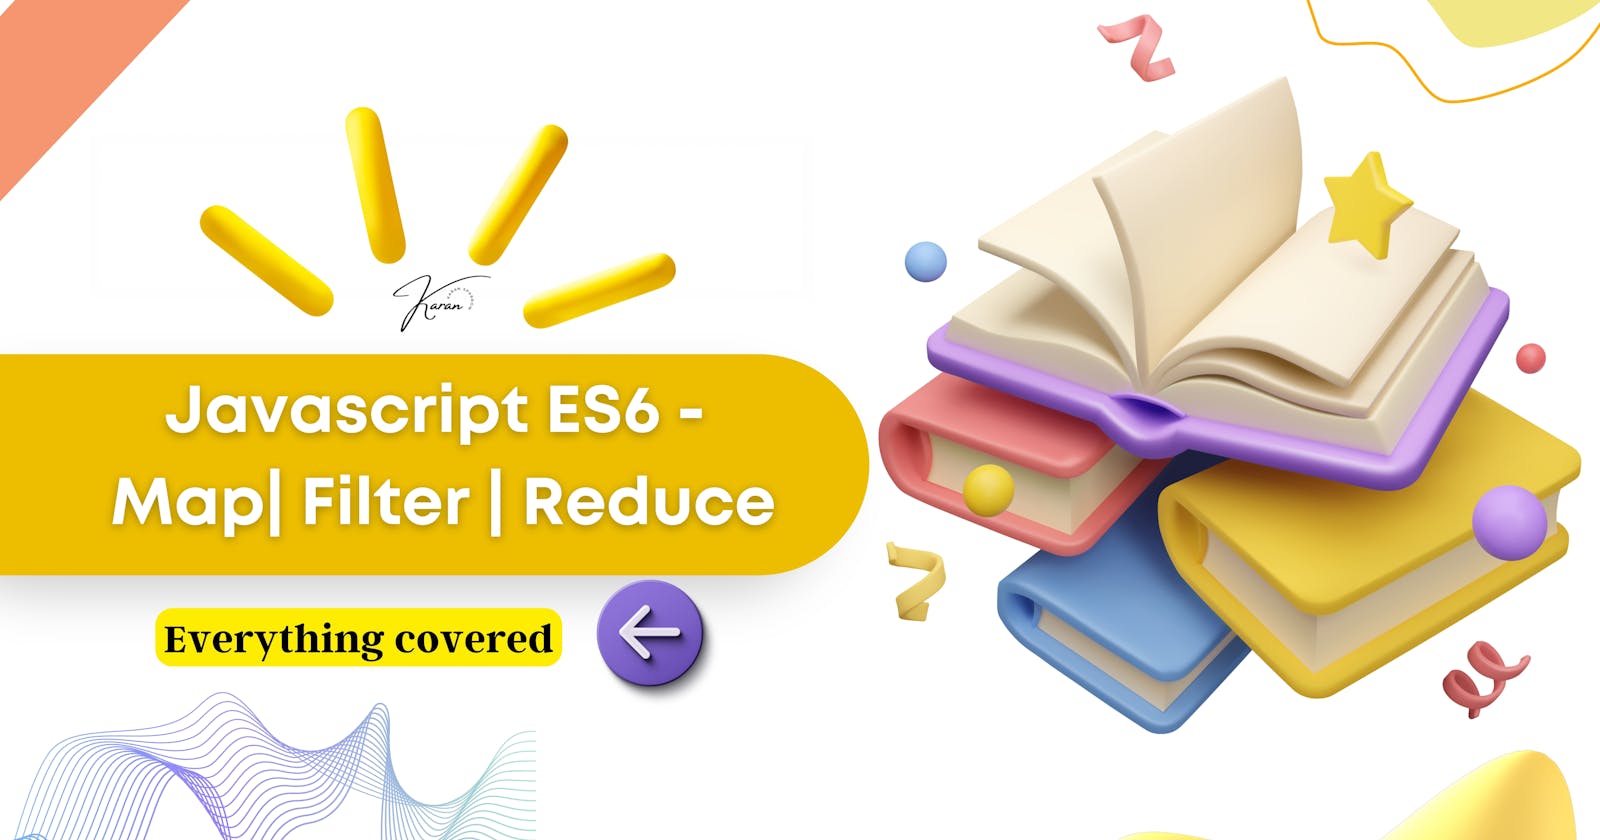 Javascript ES6 - Map| Filter | Reduce